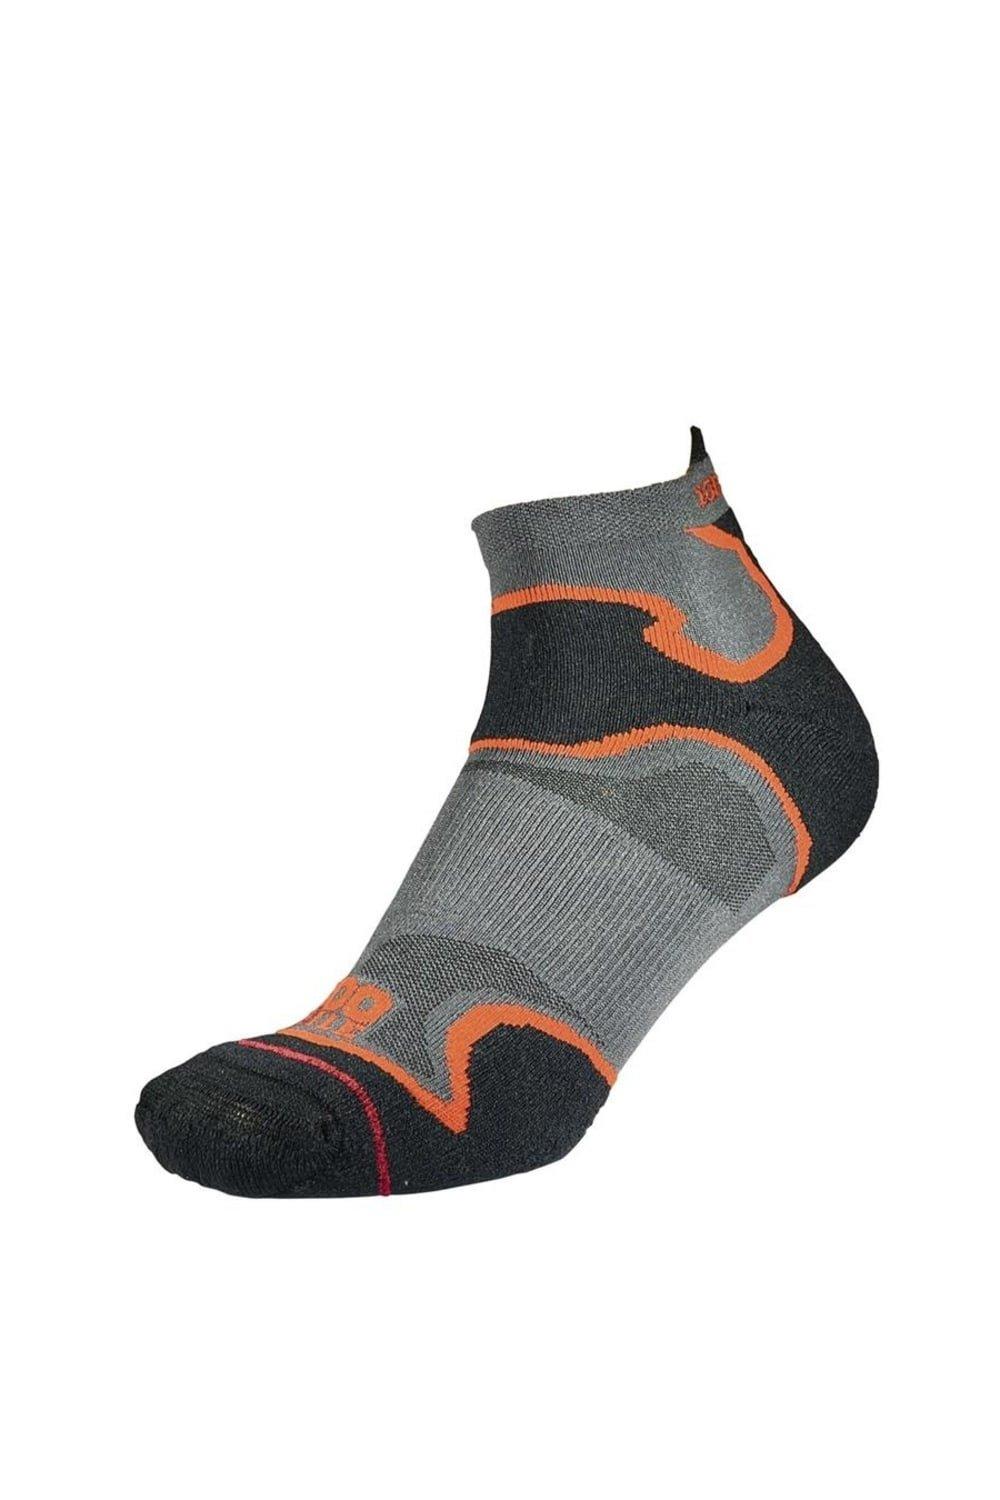 Fusion Ankle Socks